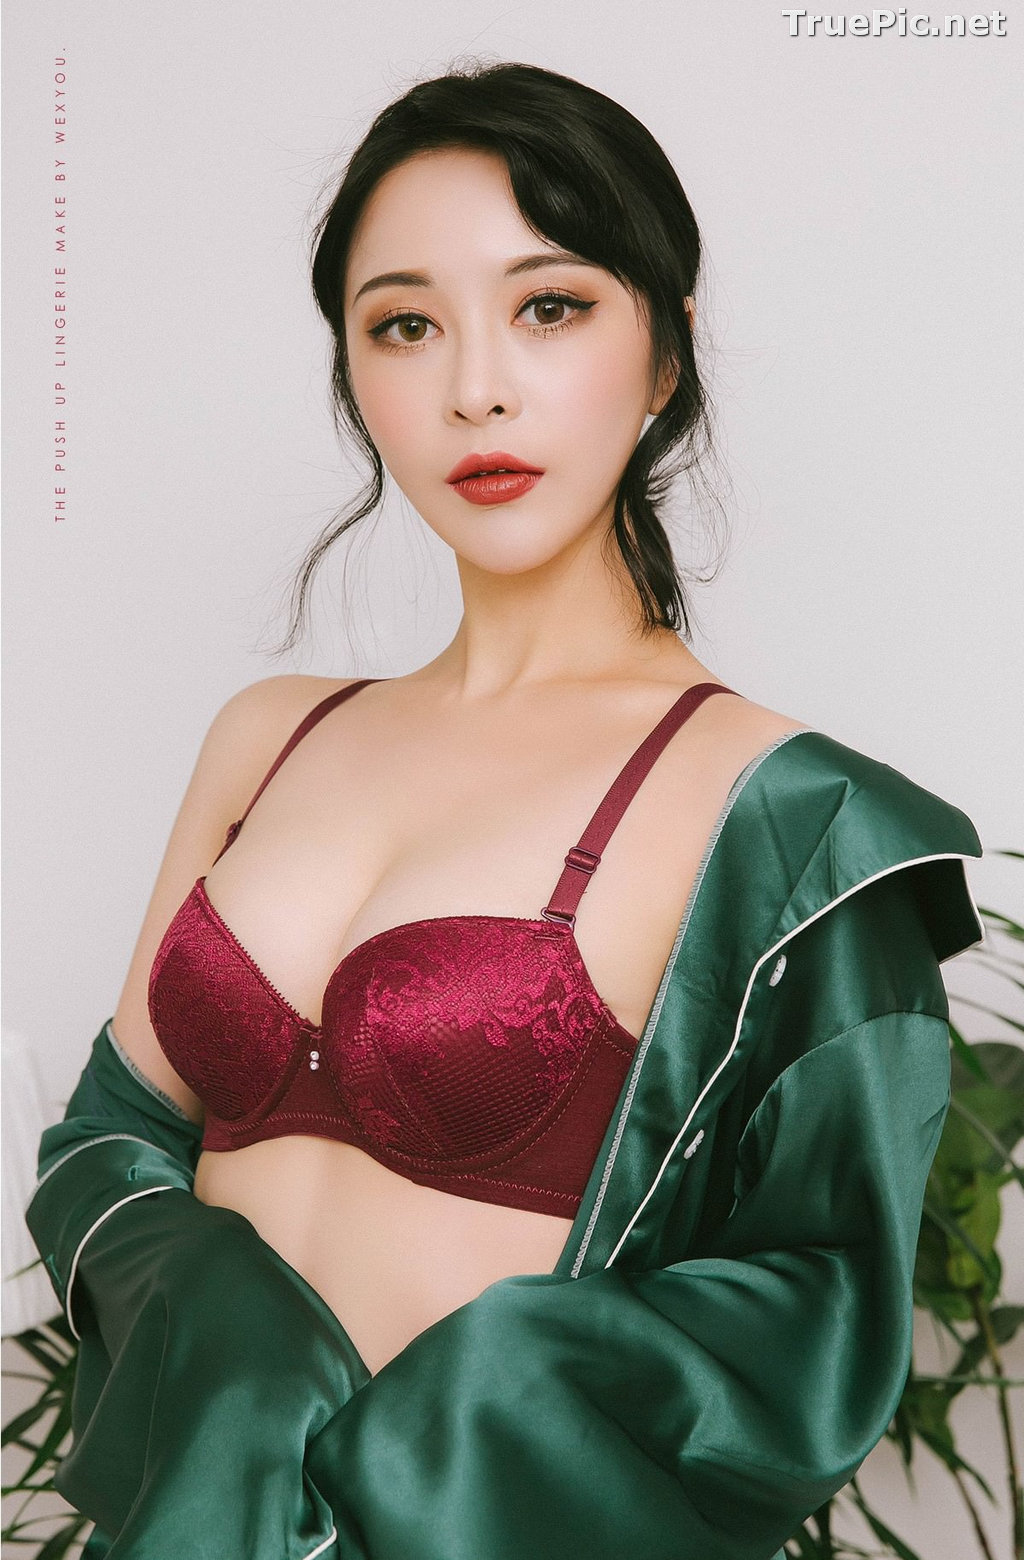 Image Ryu Hyeonju - Korean Fashion Model - Pijama and Lingerie Set - TruePic.net - Picture-5